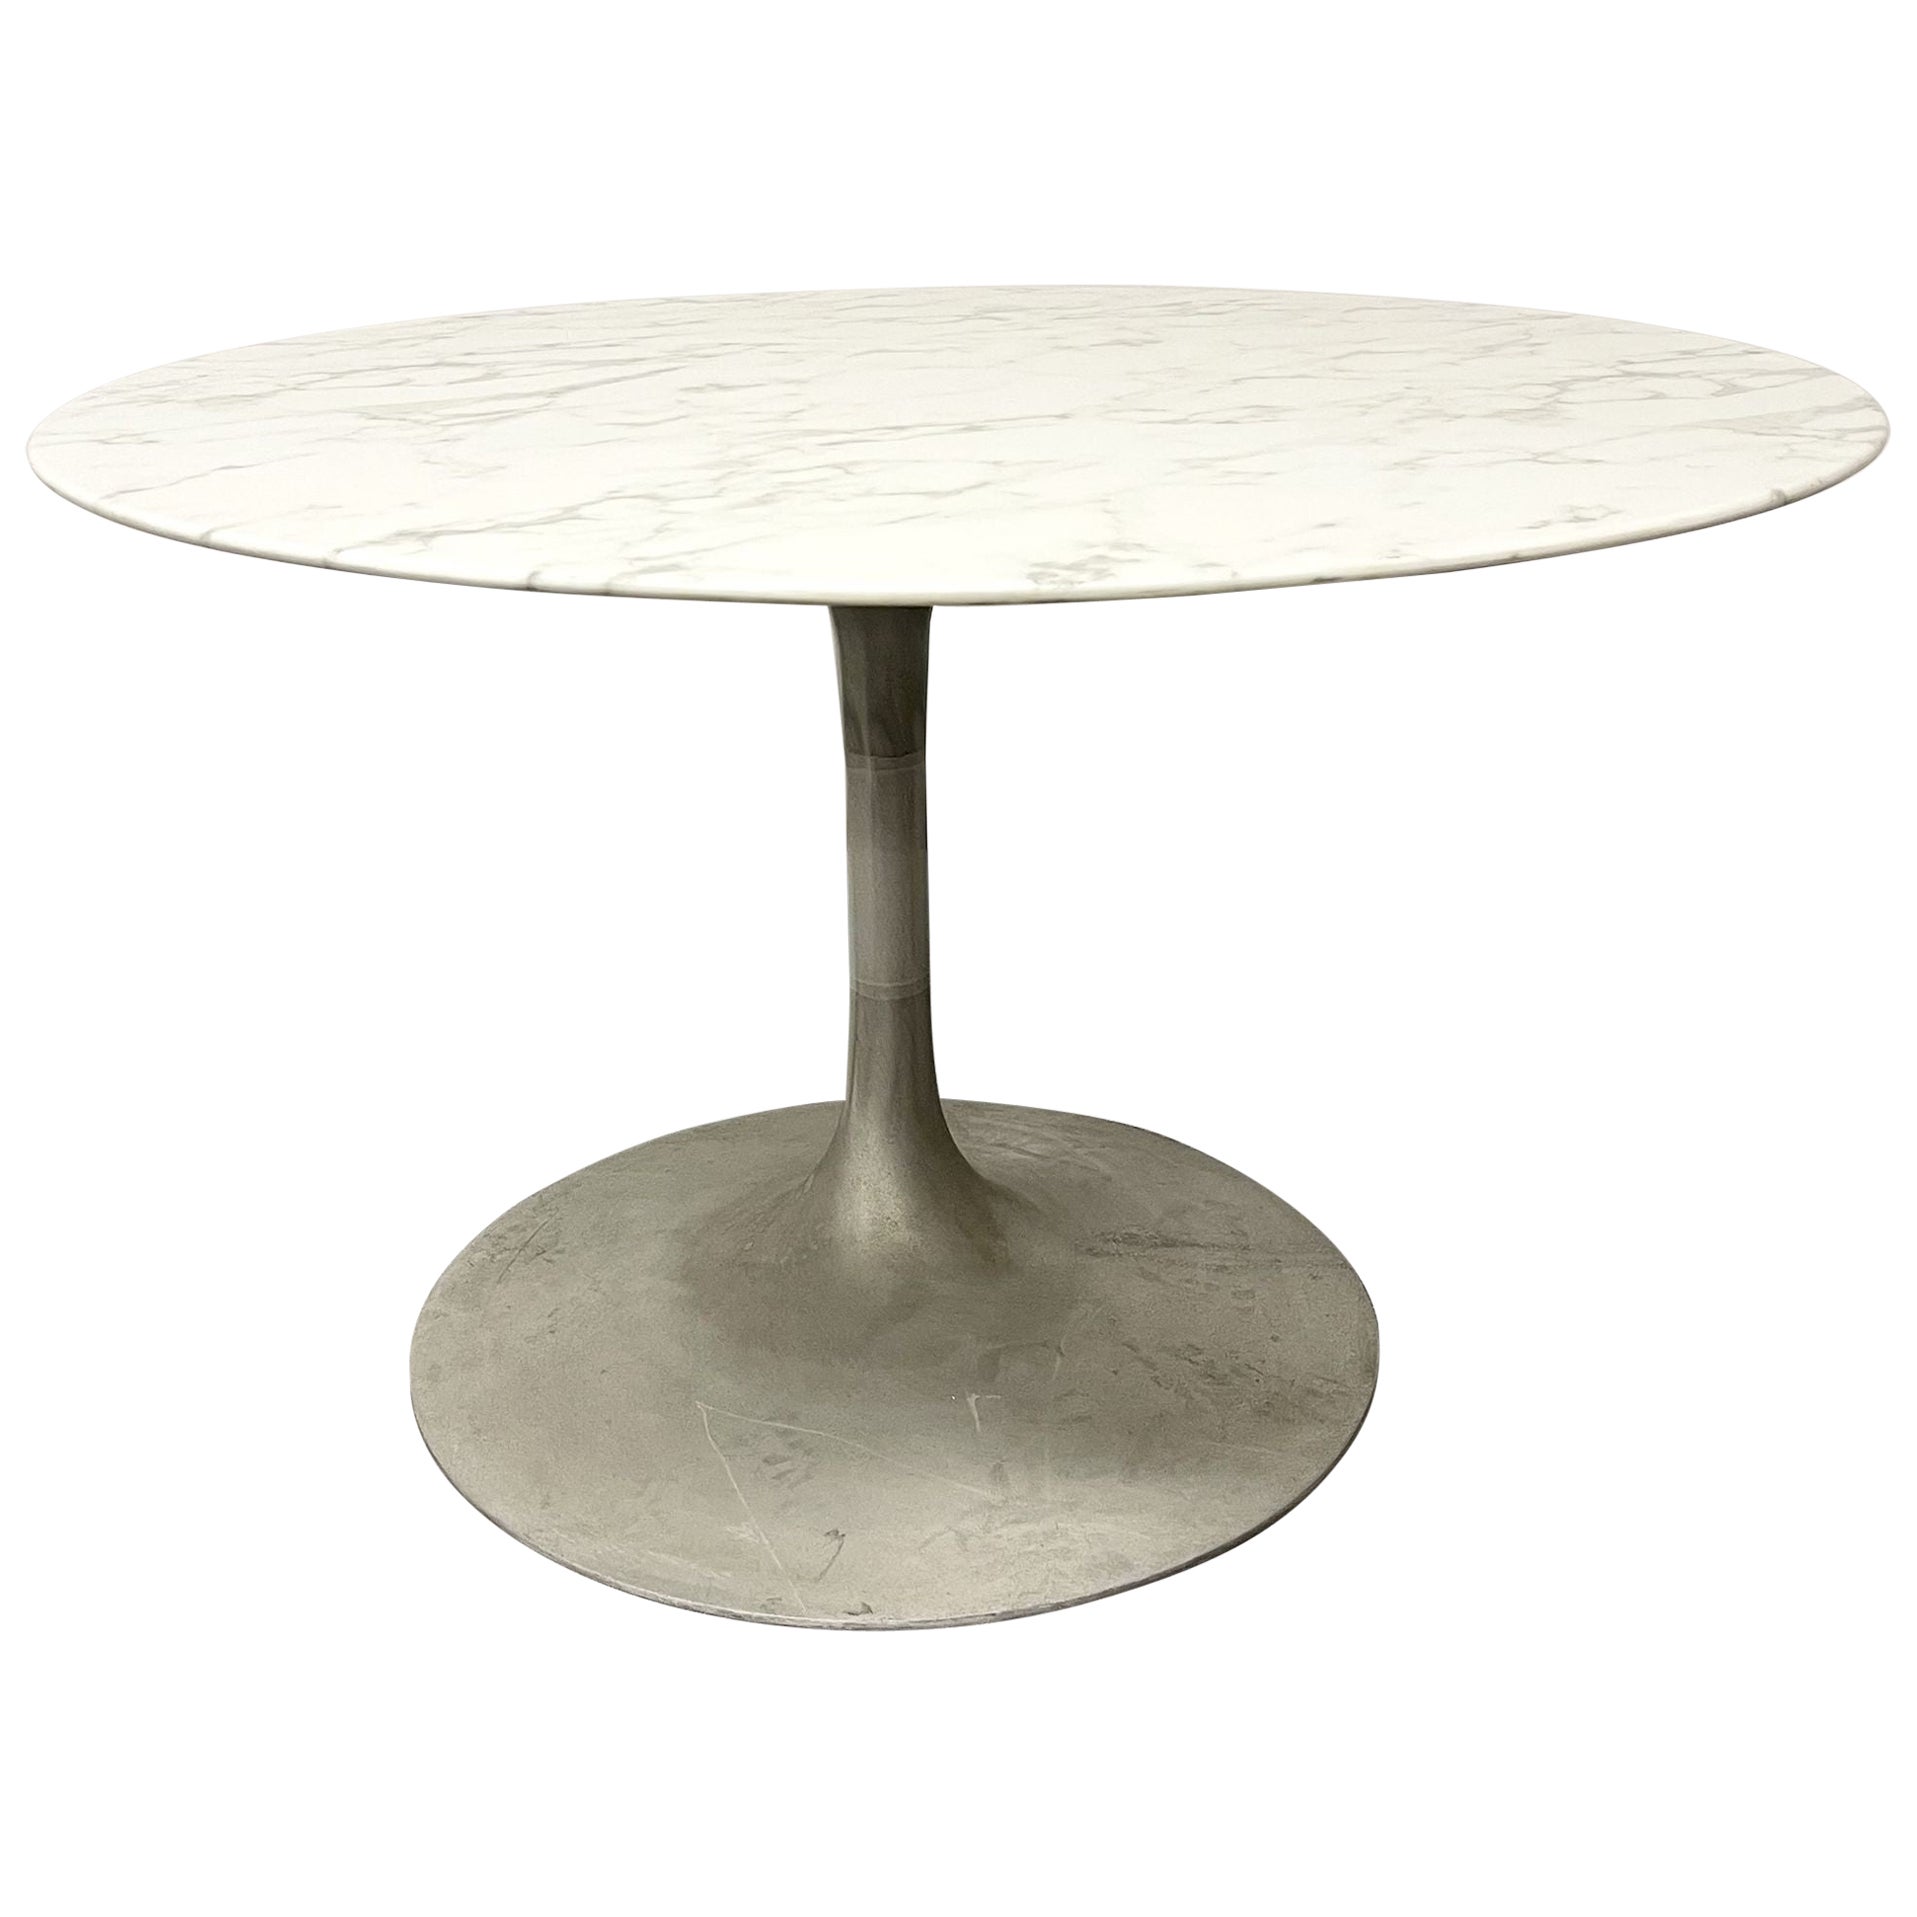 Eero Saarinen Table, Carrara Marble Top, Mid-Century Modern